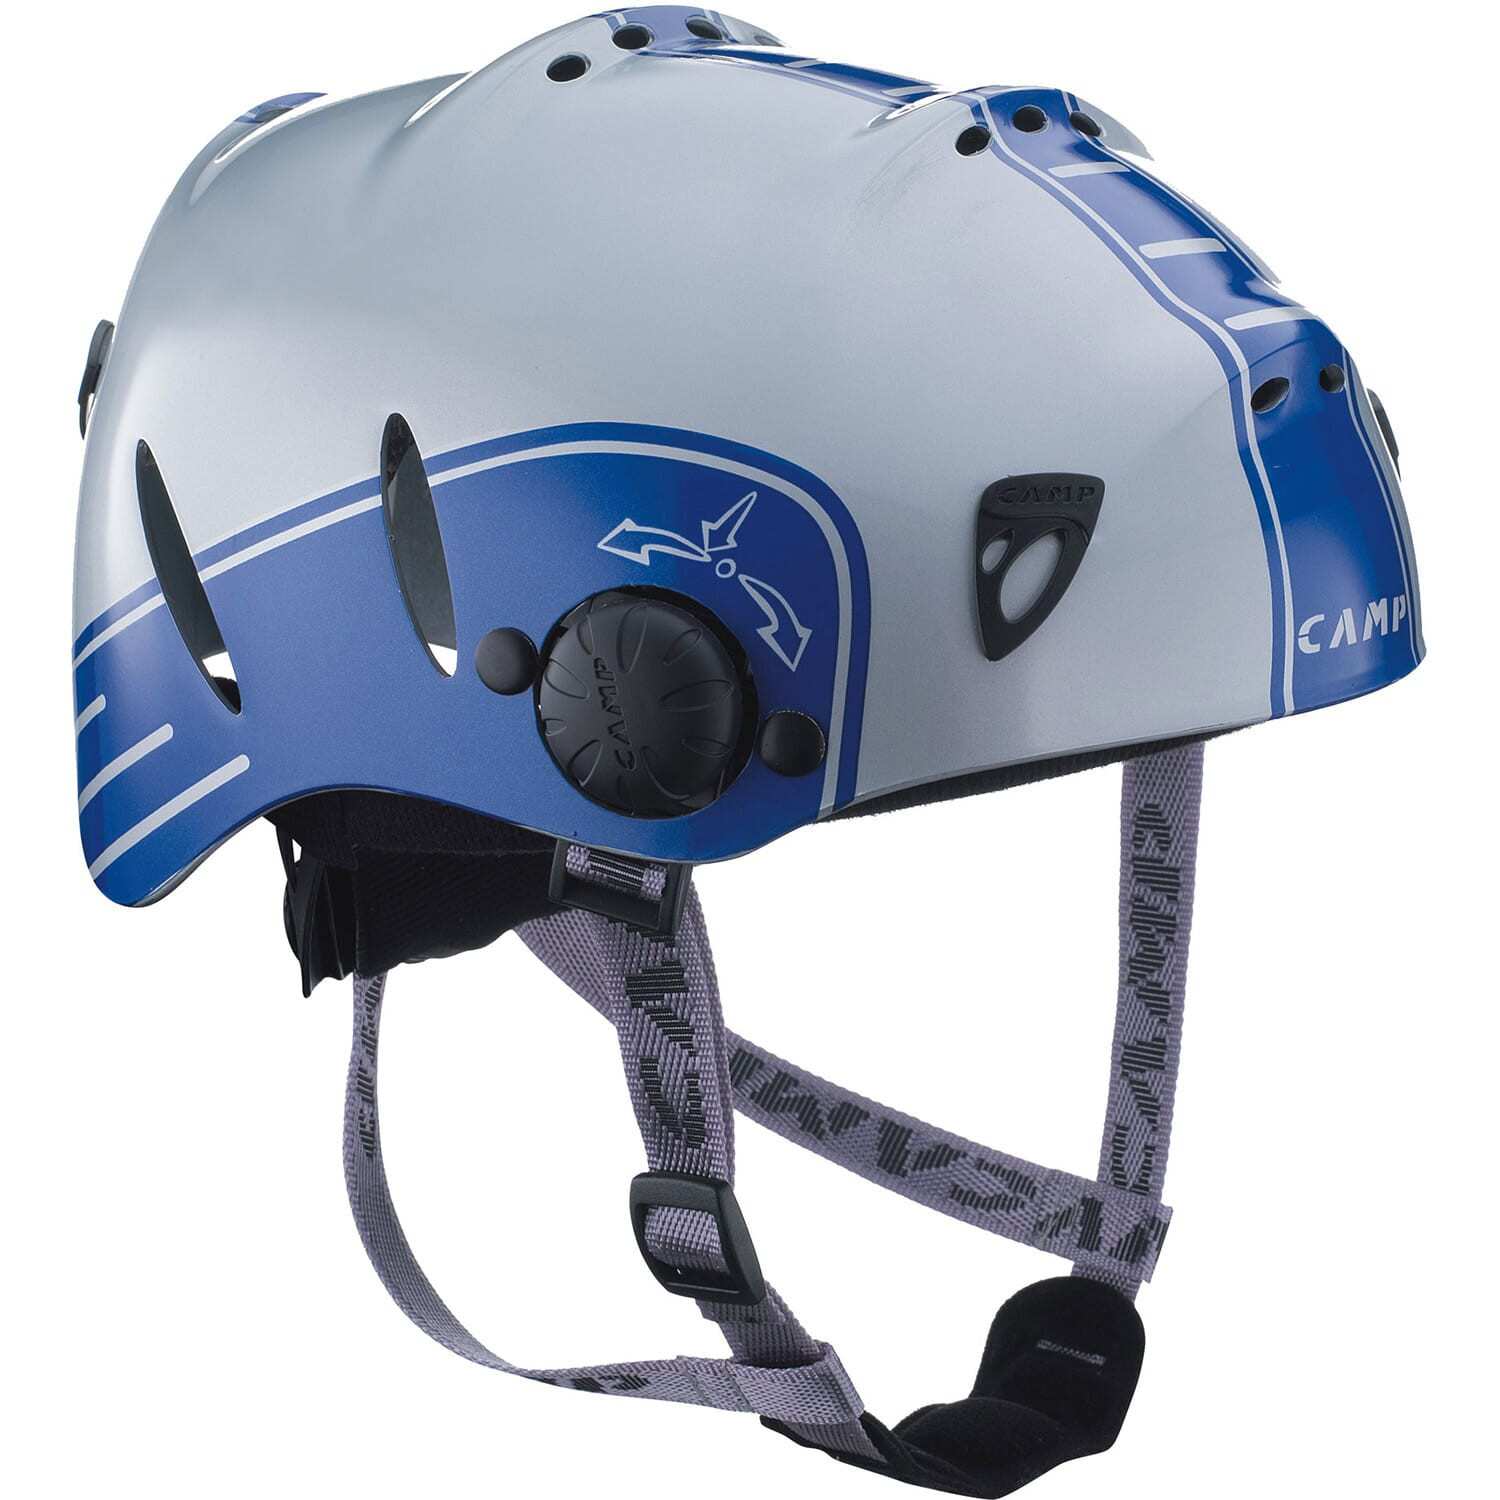 Camp Cosmic Helmet for Rock Climbing, Ice Climbing